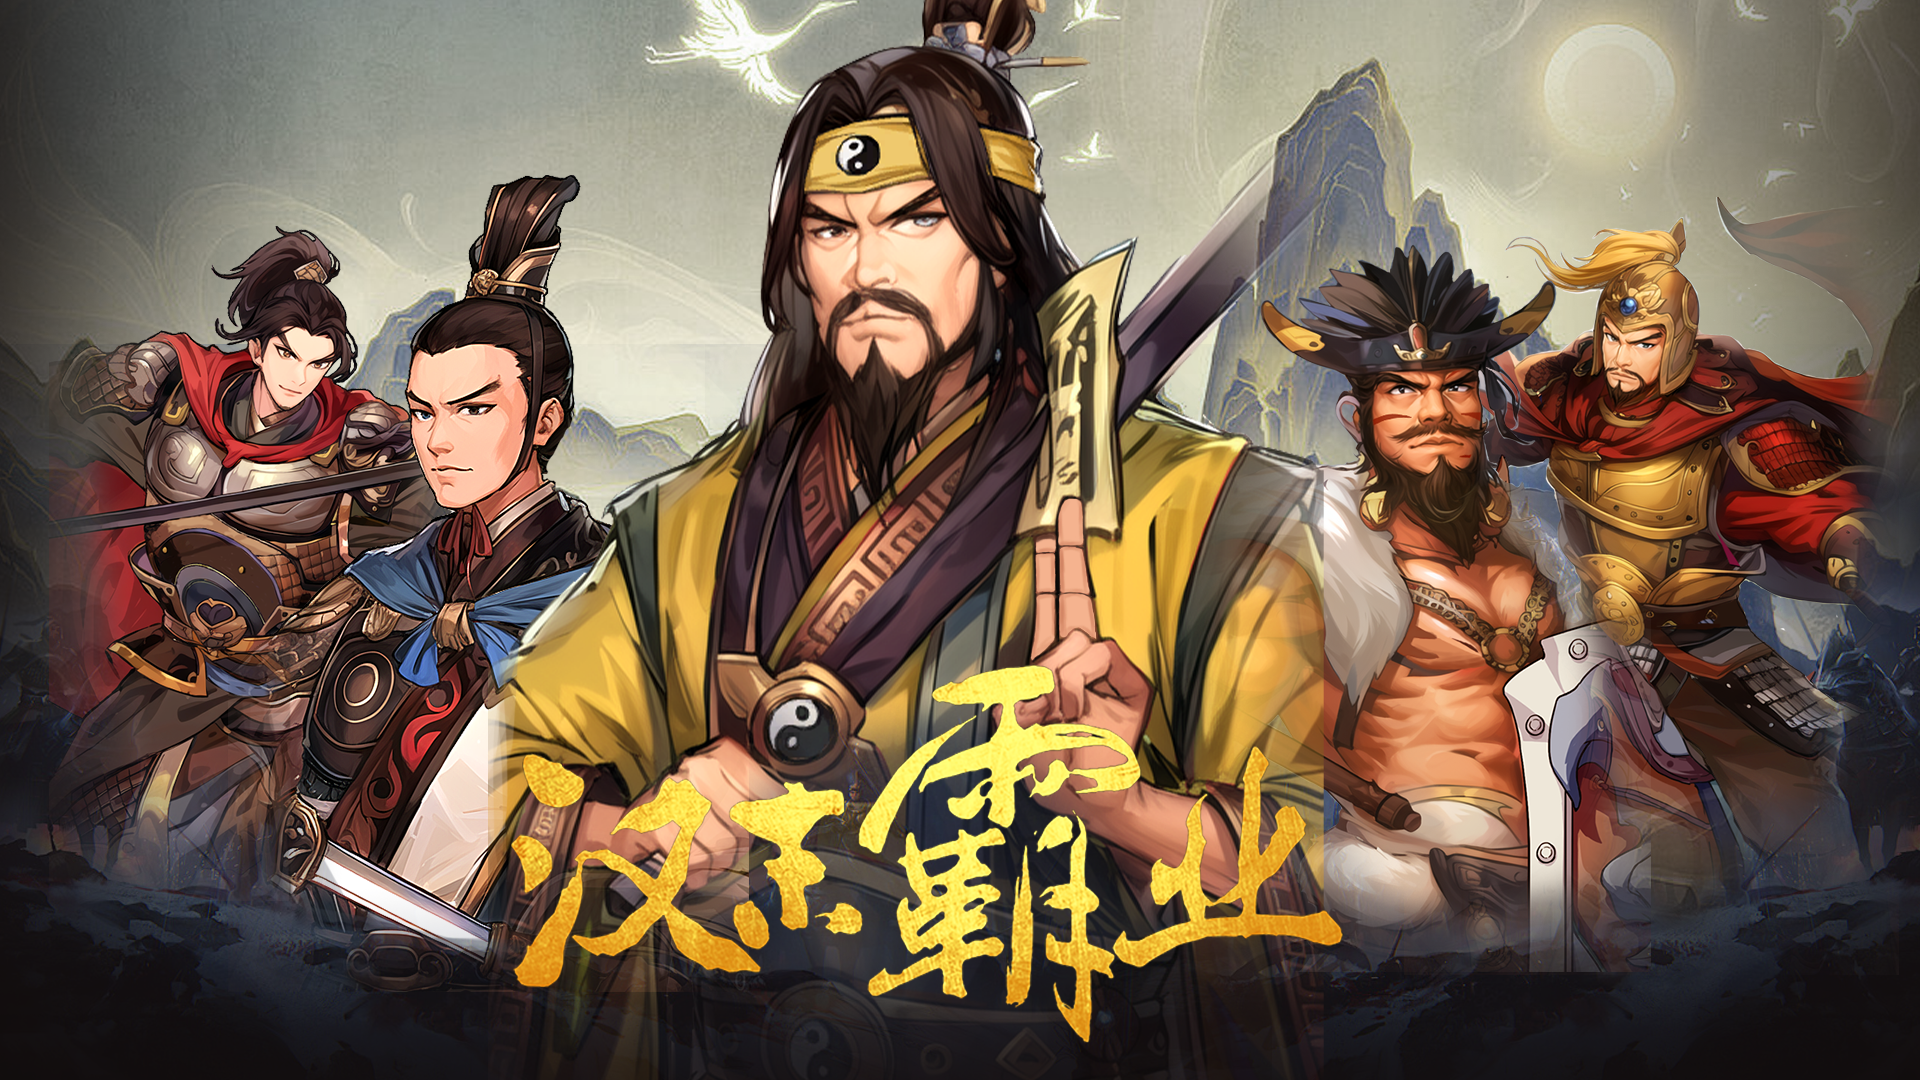 三国志汉末霸业|v1.0.0.4002|全DLC|官方中文|Three Kingdoms: The Last Warlord插图